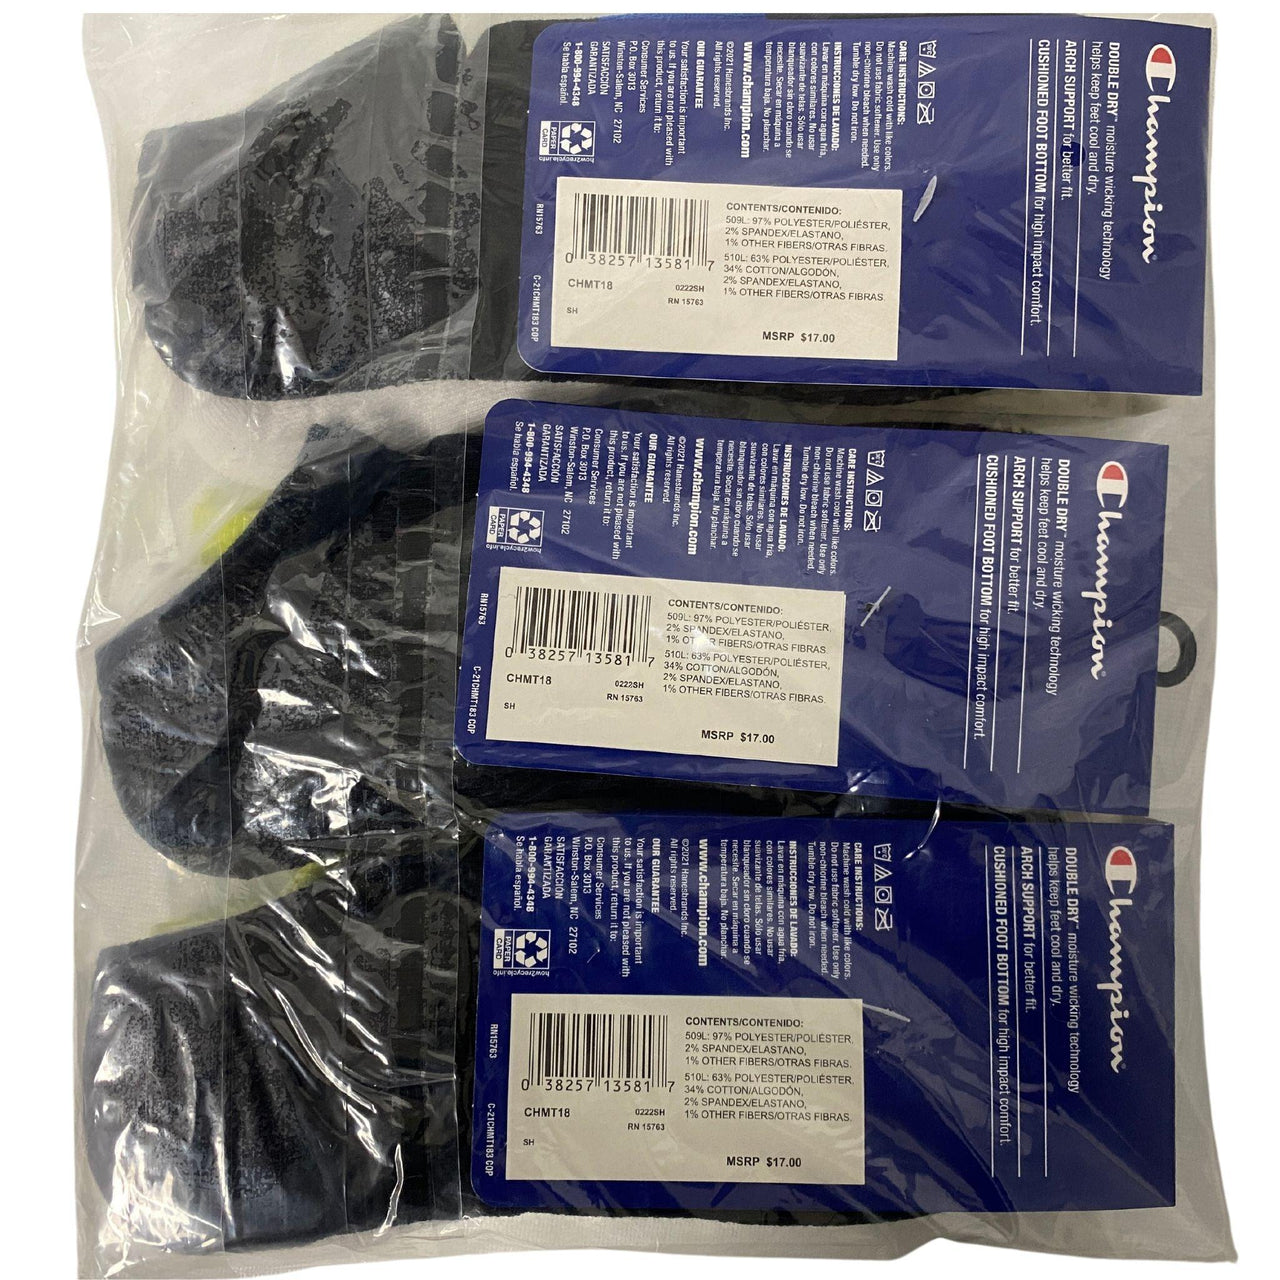 Champion Socks (3 Pair / Pack - 12 Pks/Case) - Discount Wholesalers Inc